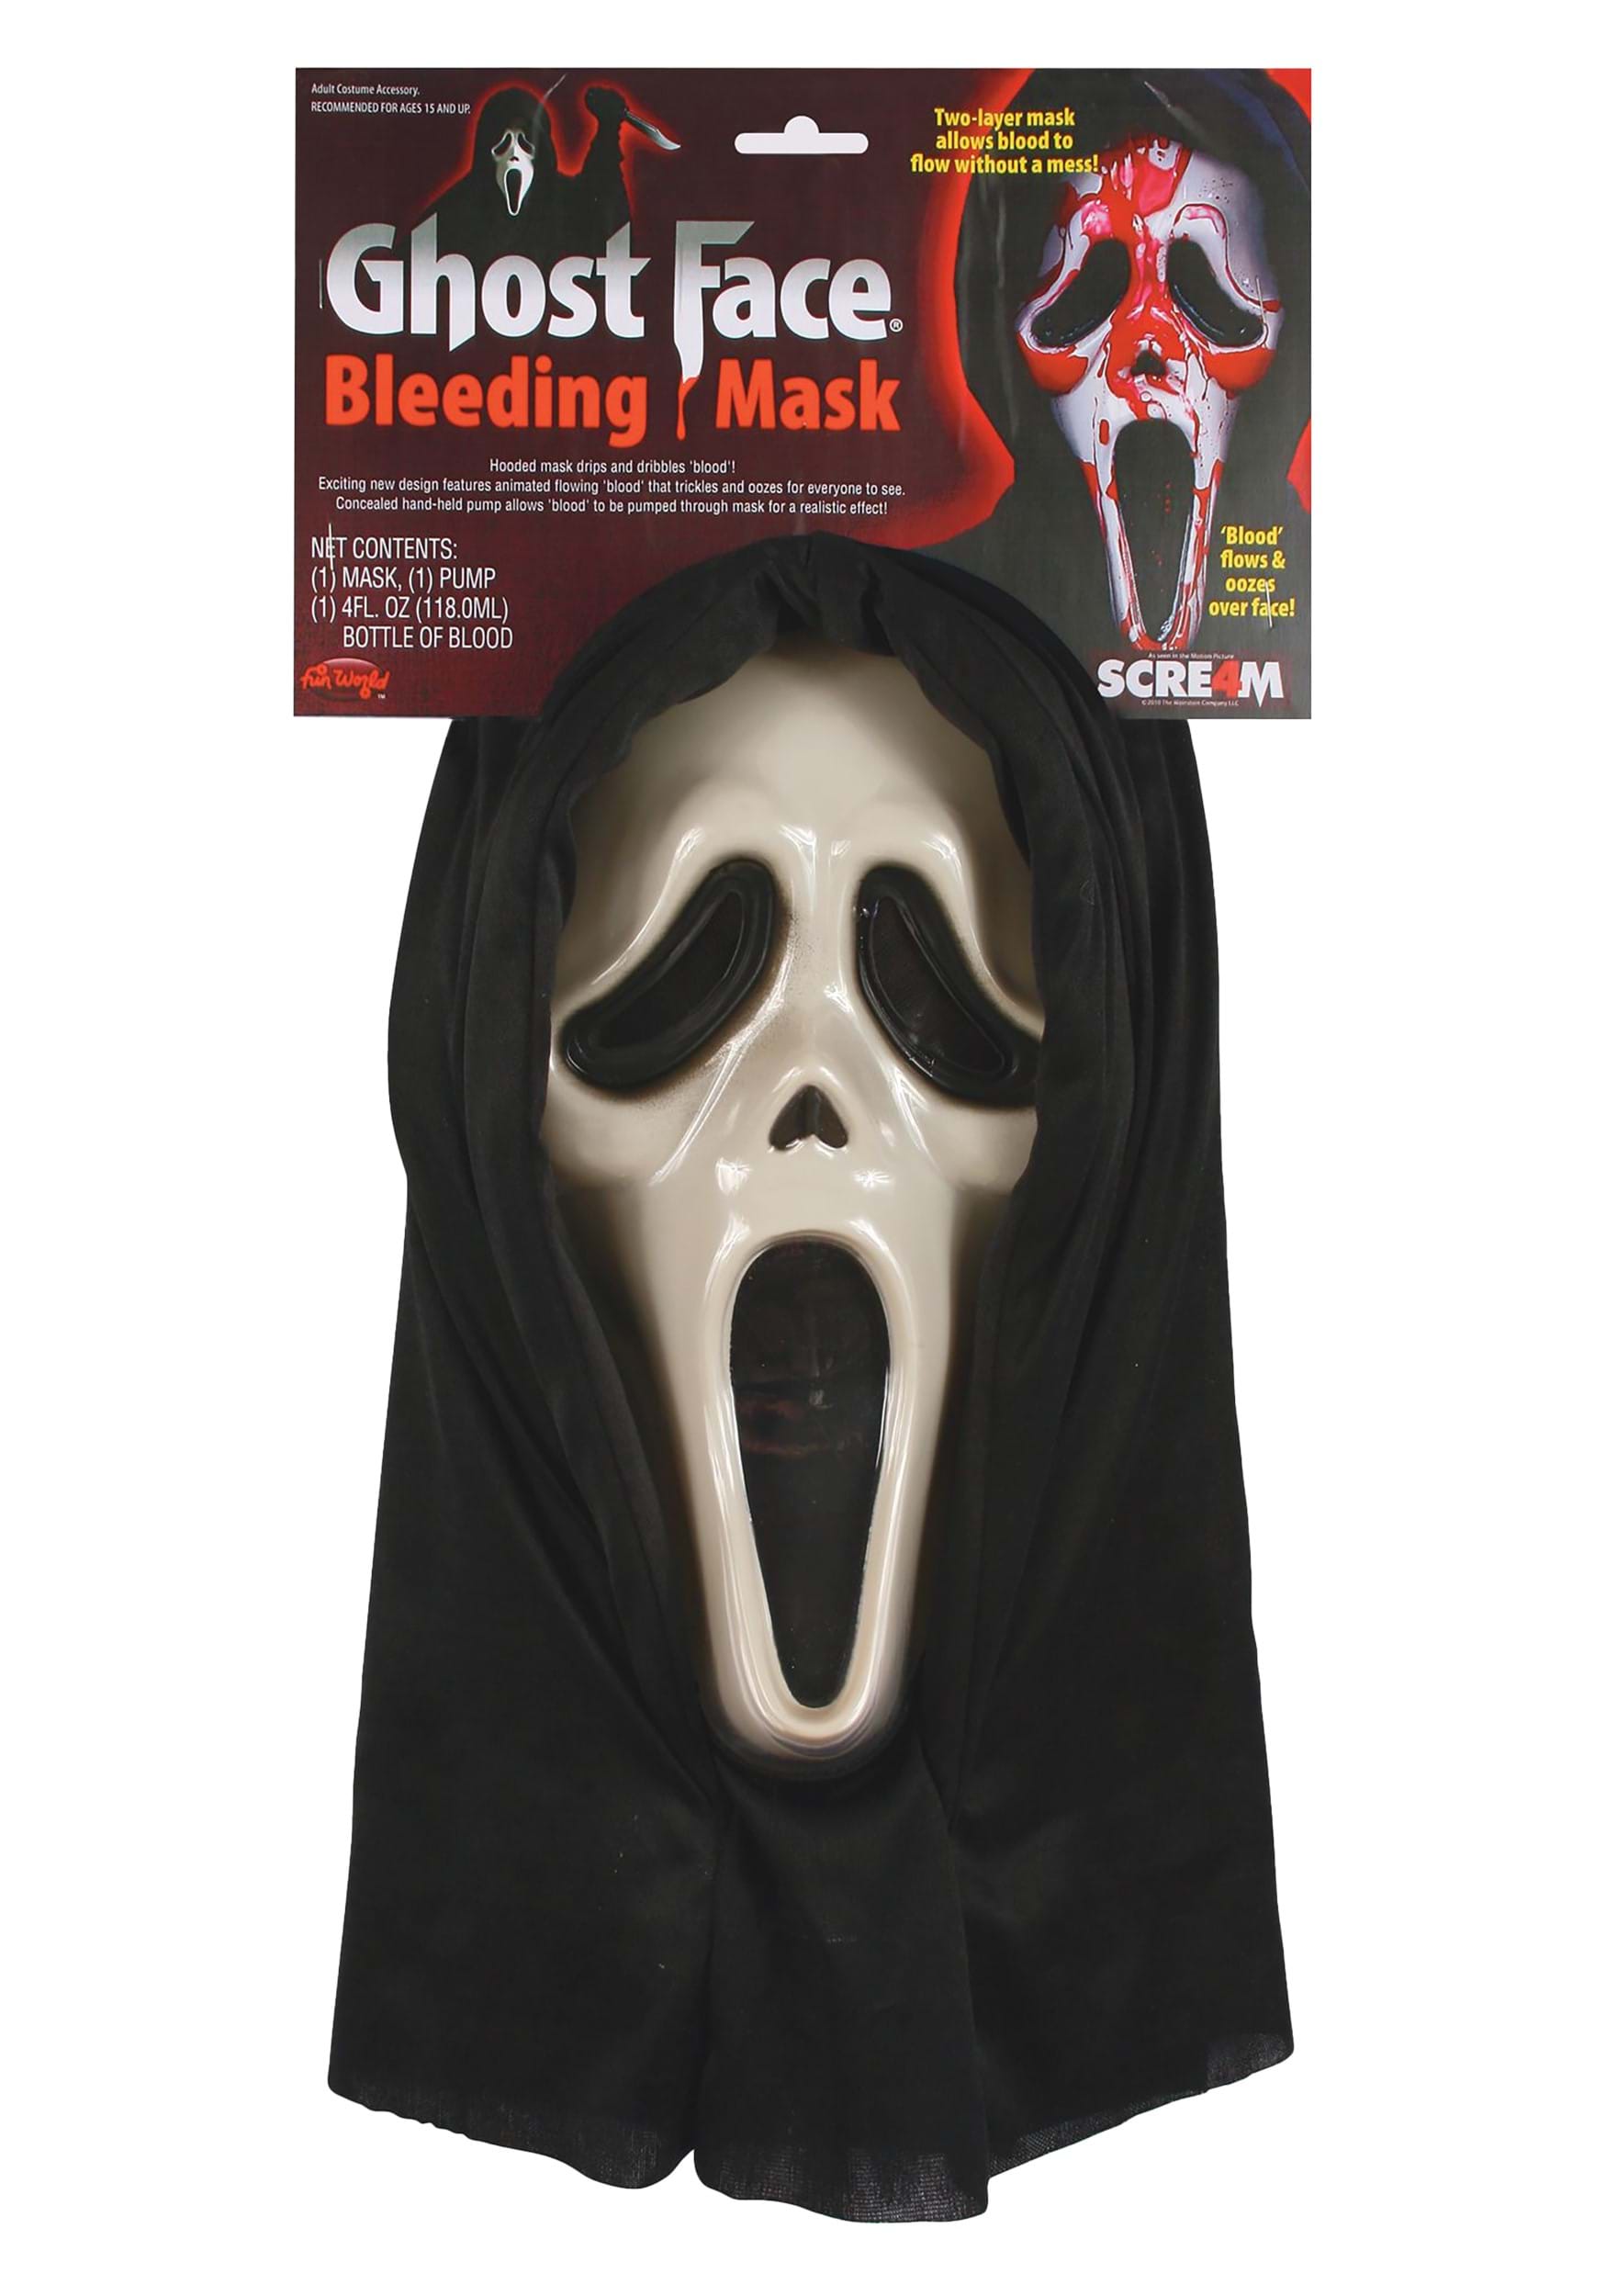 chrysant voorzichtig metaal Ghost Face Bleeding Mask for Adults